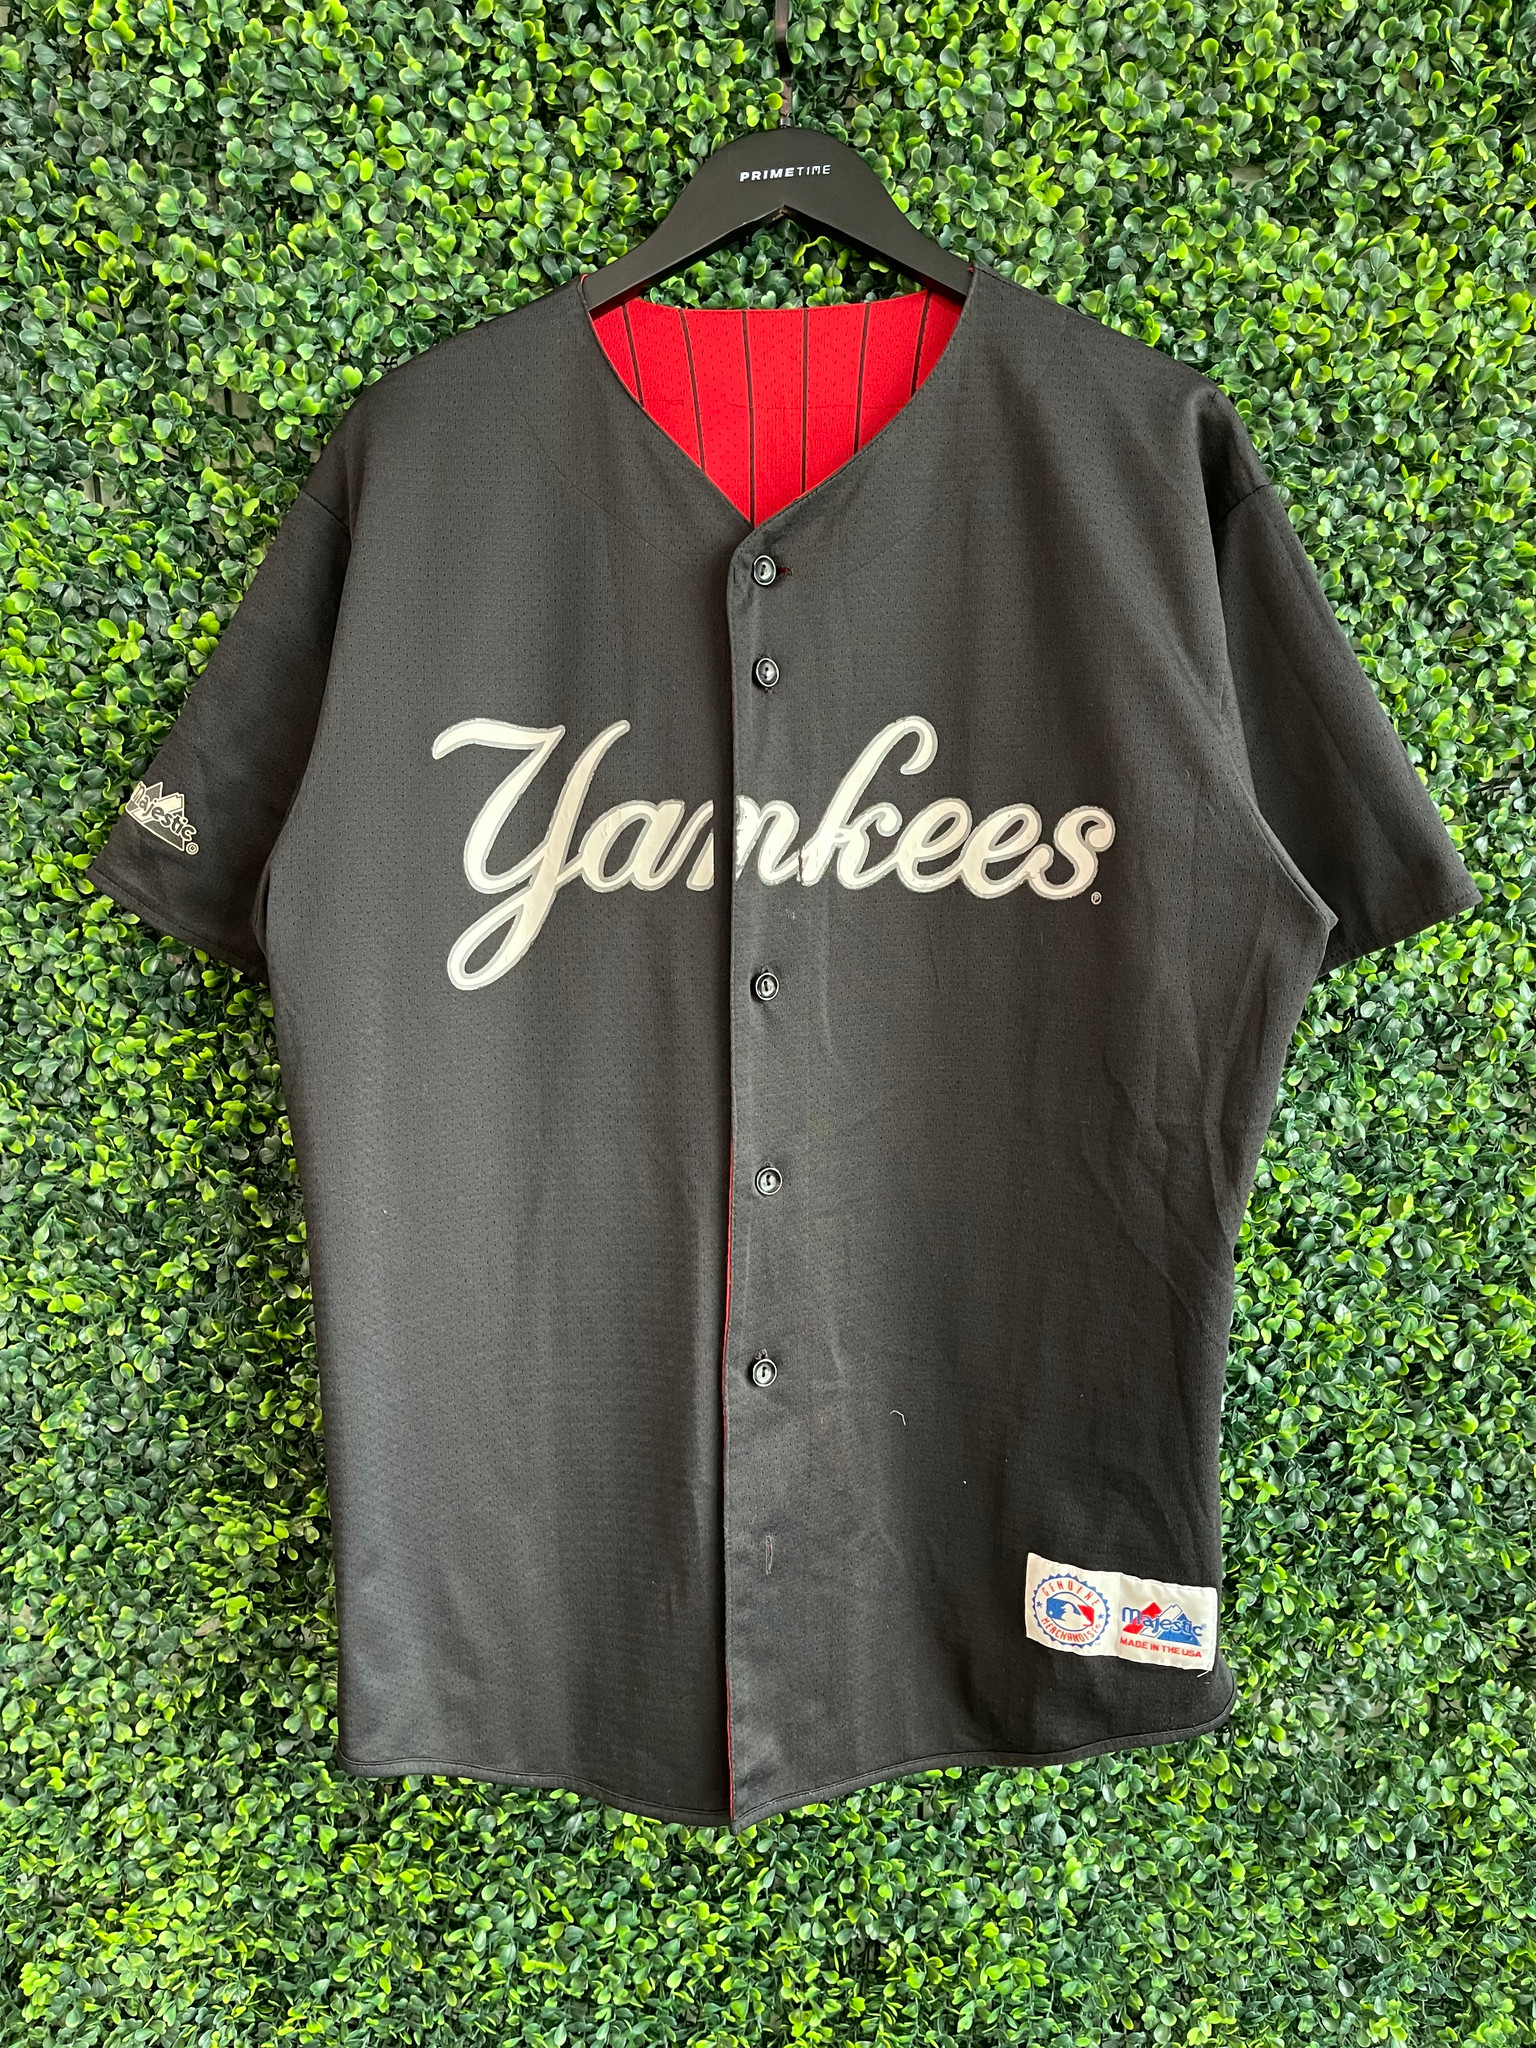 Vintage New York Yankees 100th Anniversary Baseball Jersey XL Majestic 2003